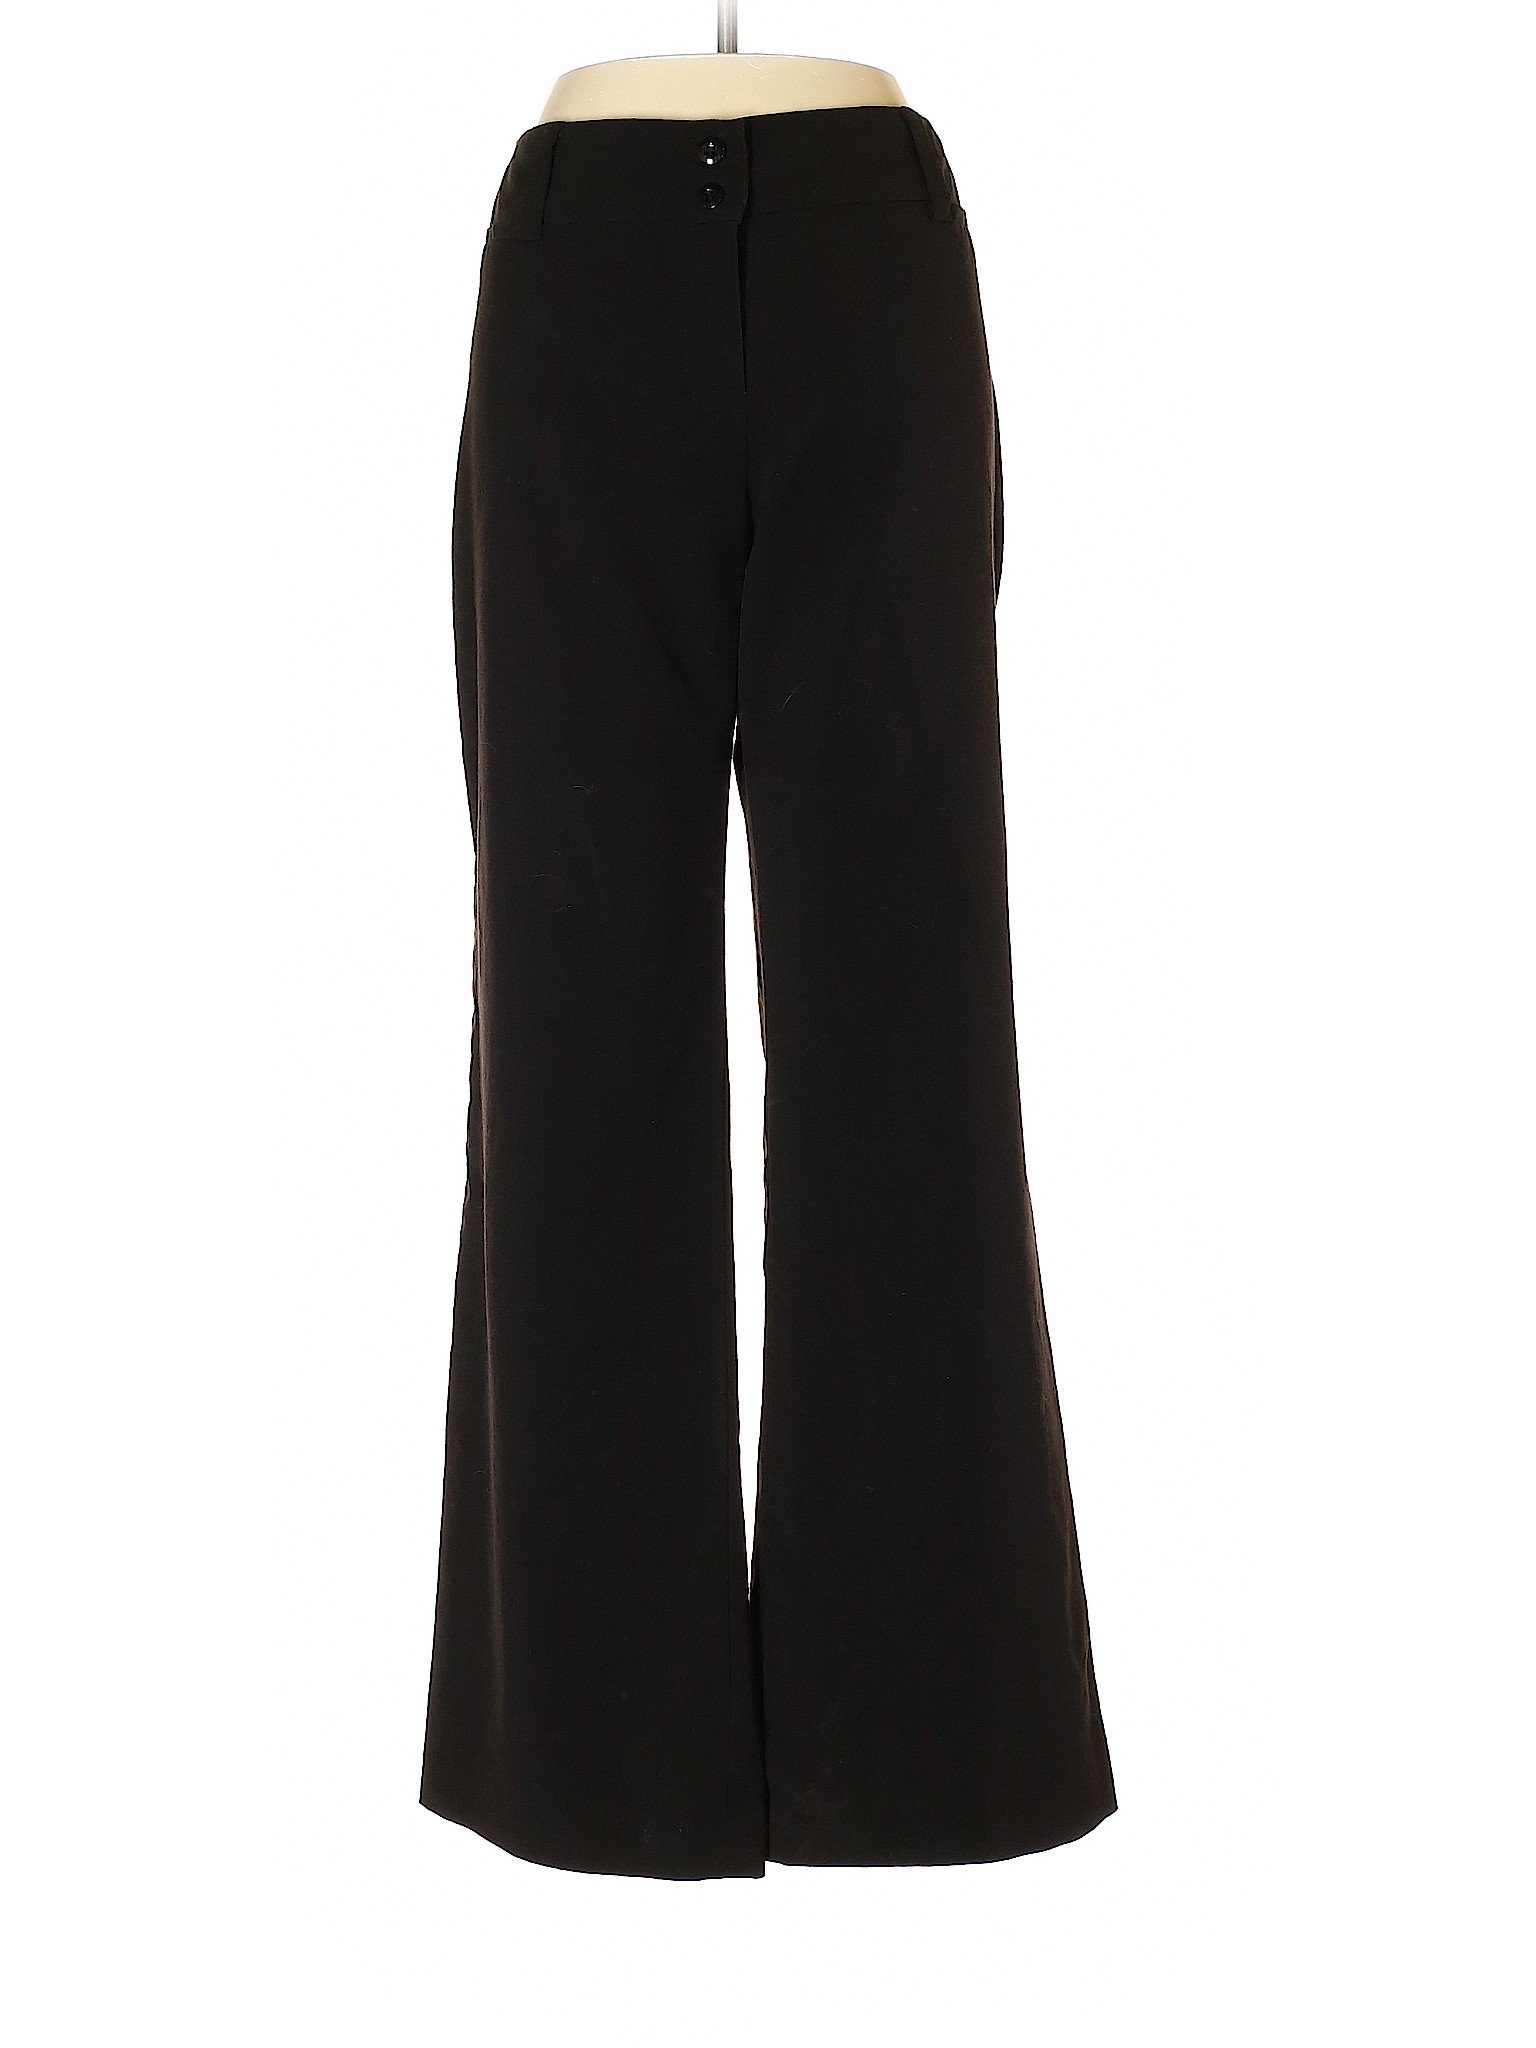 AB Studio Women Black Dress Pants 8 | eBay